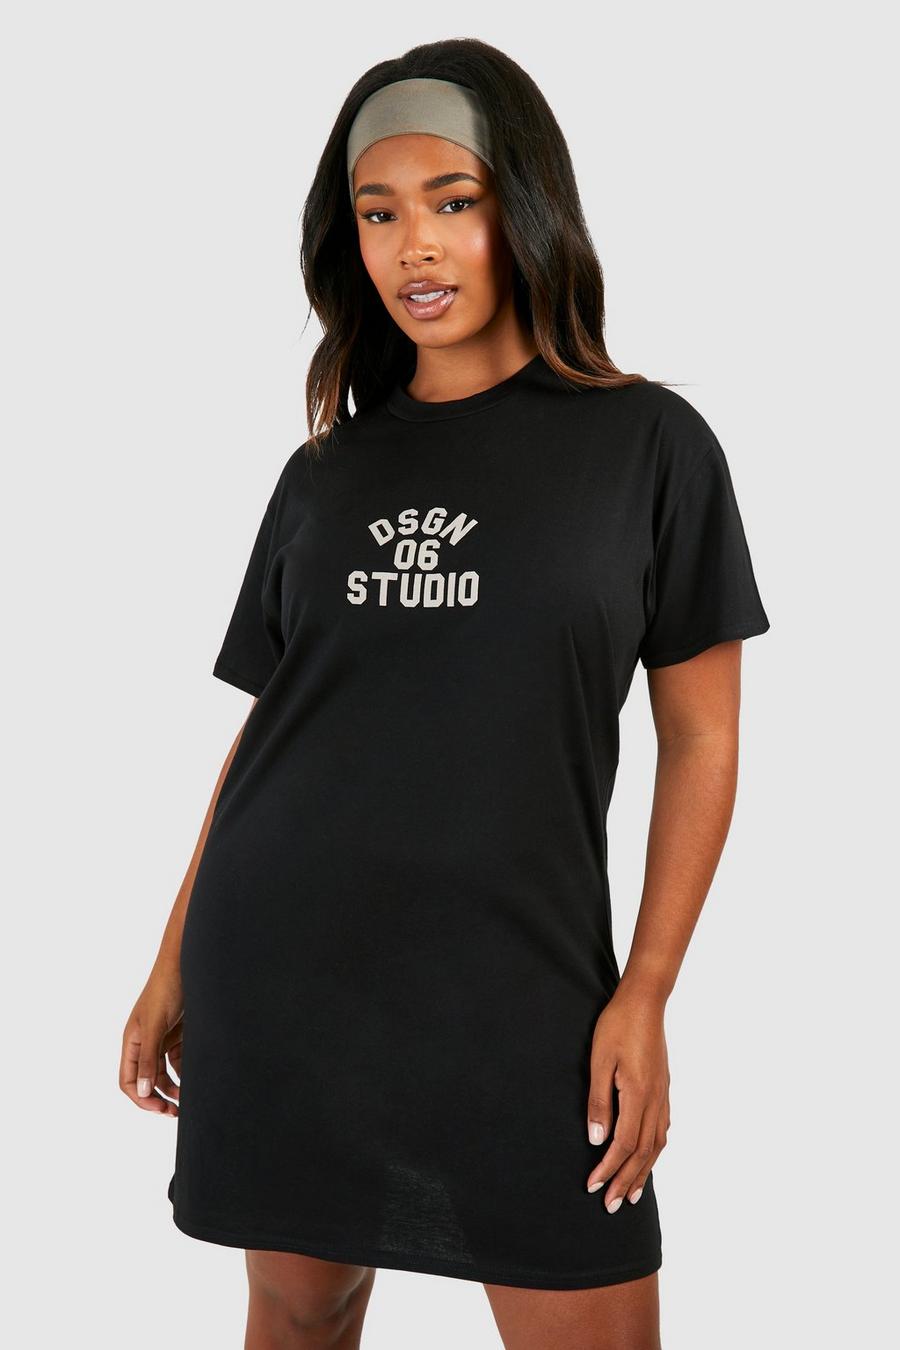 Vestido camiseta Plus con estampado Dsgn Studio, Black